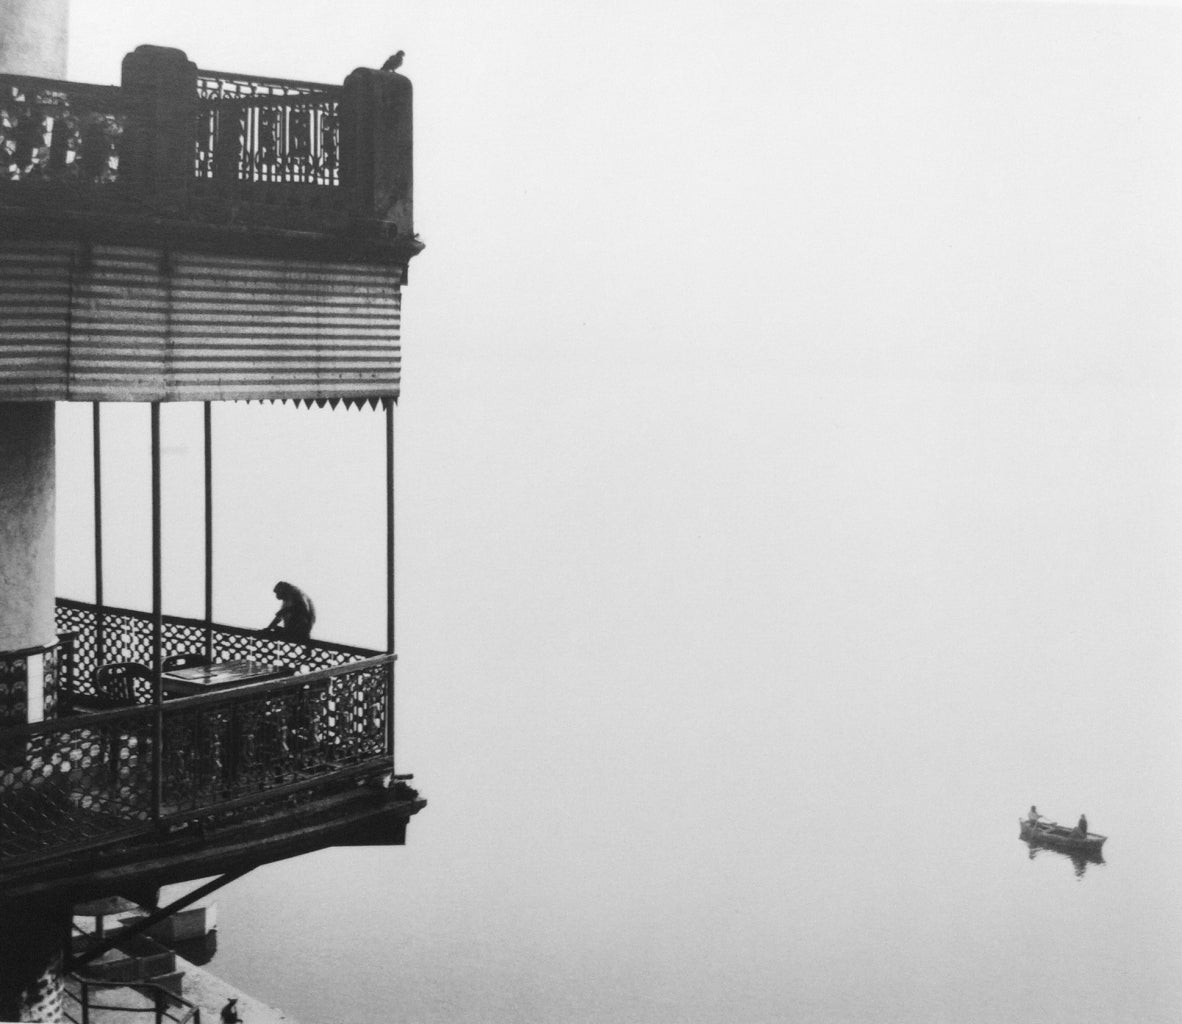 Untitled (Monkey on Balcony / Two Men in Boat) - Photograph by Pentti Sammallahti